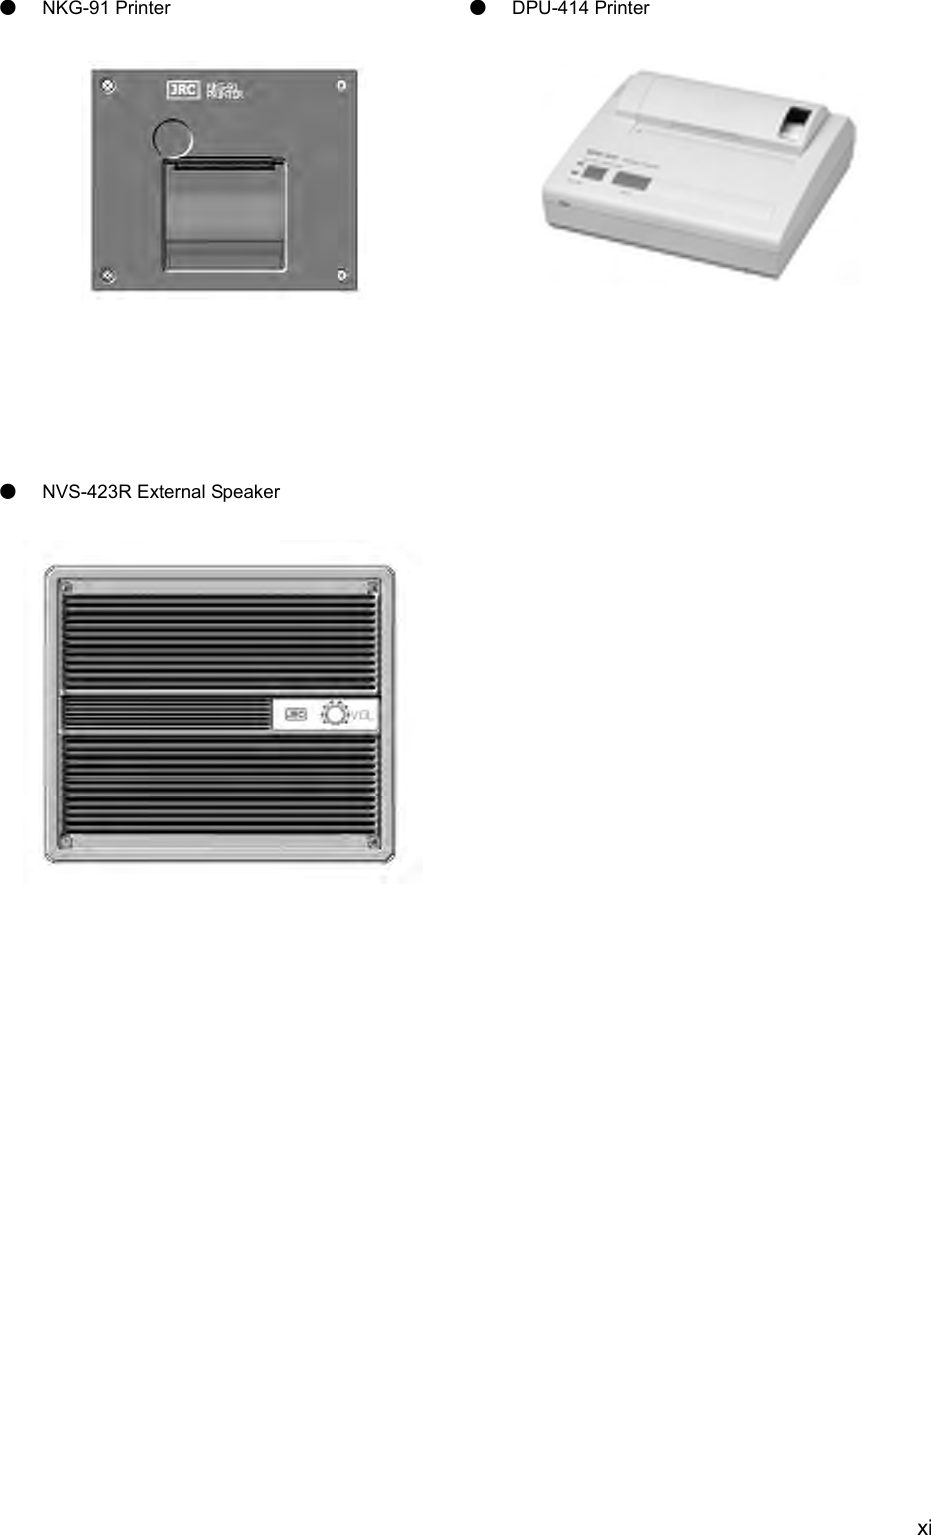  xi ● NKG-91 Printer                  ● DPU-414 Printer                  ● NVS-423R External Speaker       